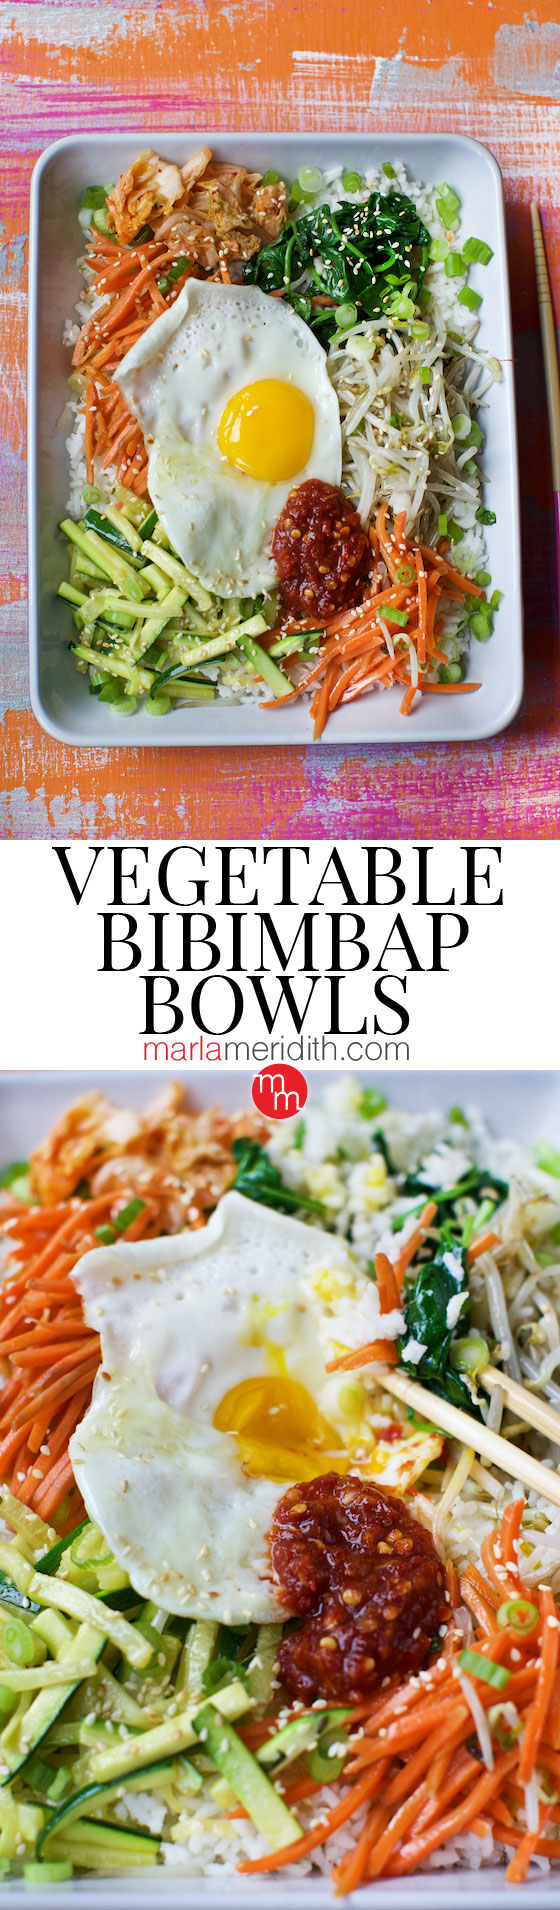 Vegetable Bibimbap Bowls recipe | MarlaMeridith.com ( @marlameridith )